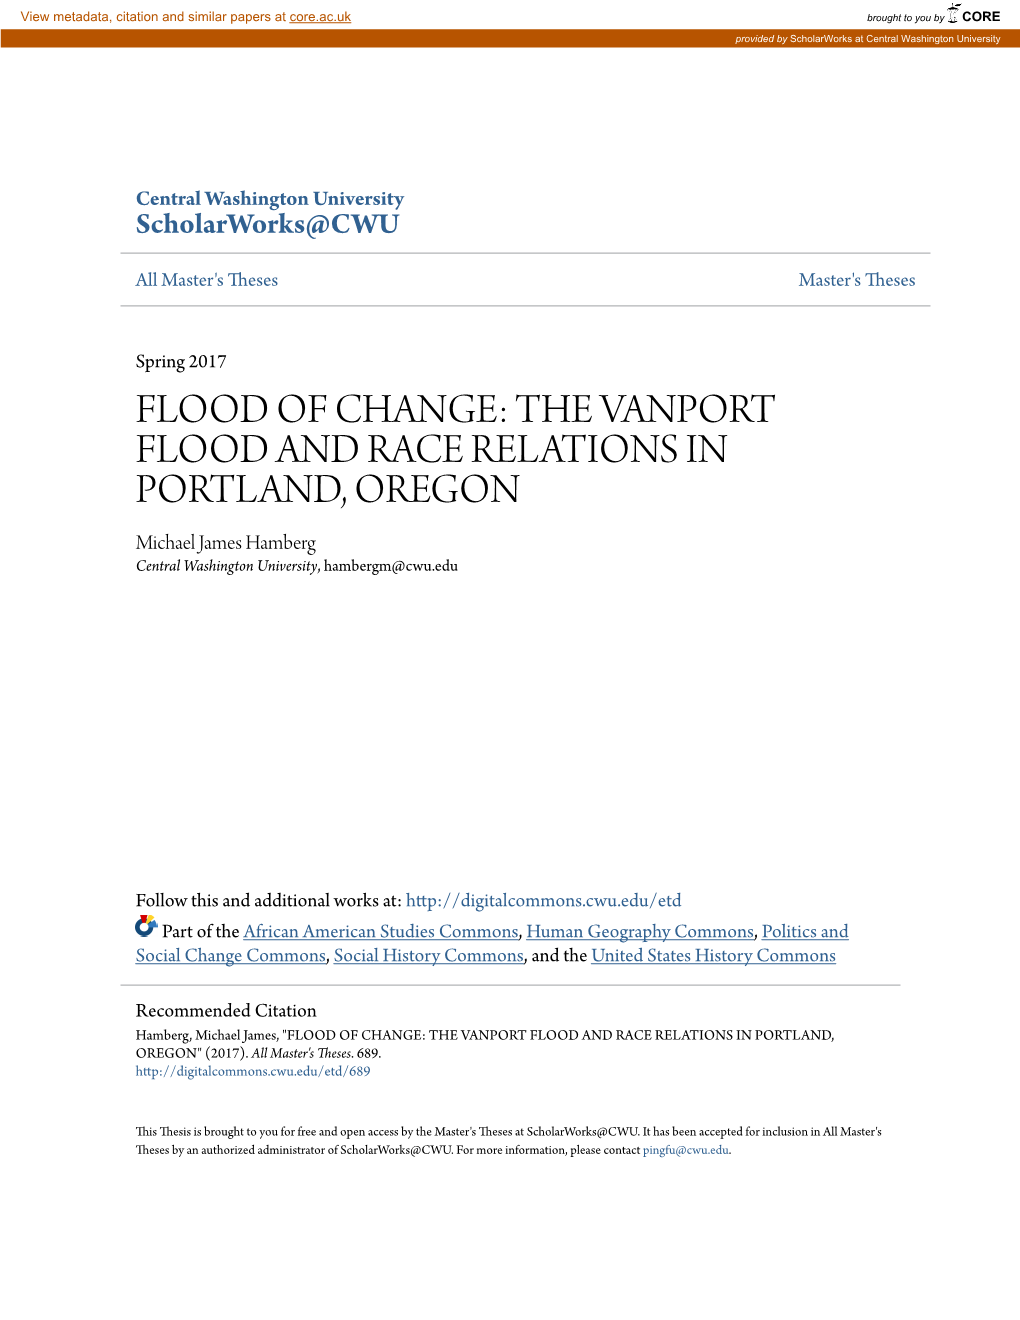 THE VANPORT FLOOD and RACE RELATIONS in PORTLAND, OREGON Michael James Hamberg Central Washington University, Hambergm@Cwu.Edu